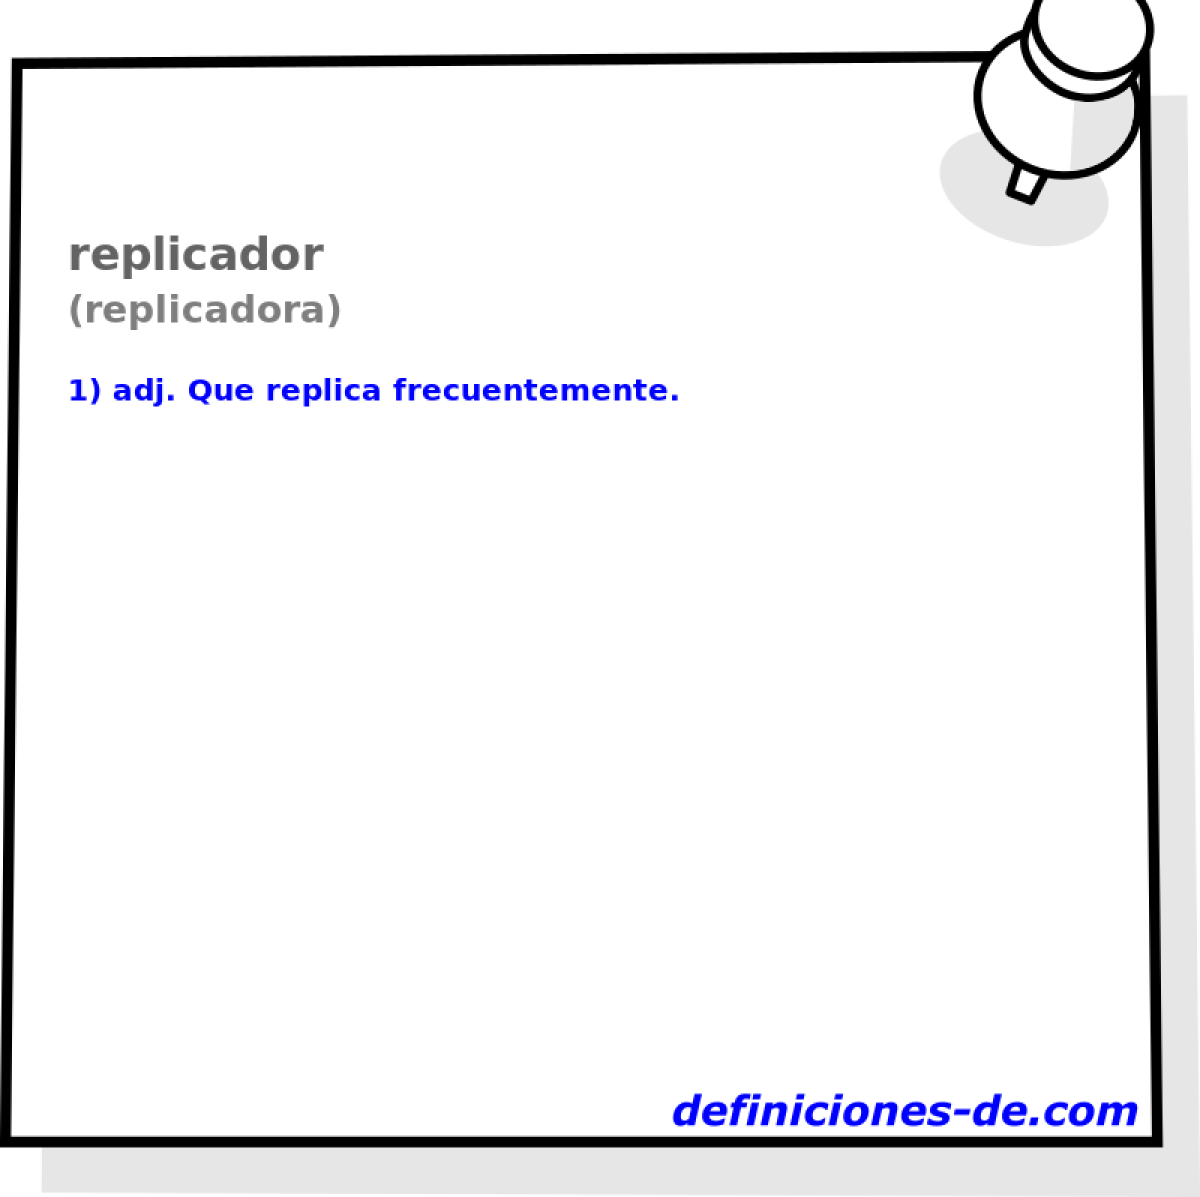 replicador (replicadora)